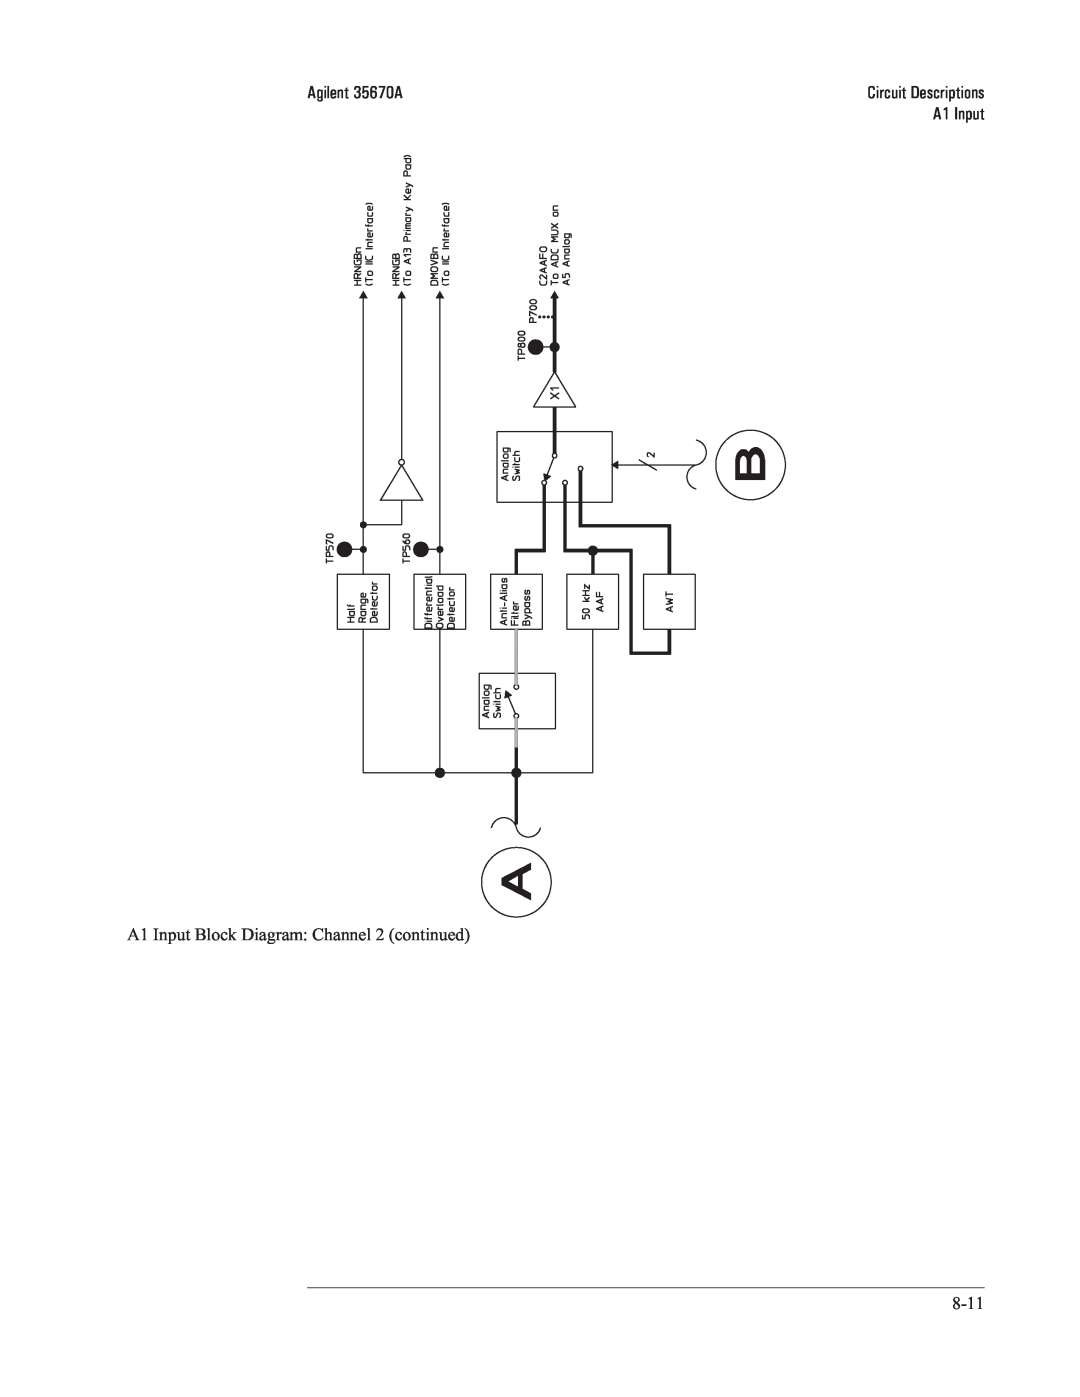 Agilent Technologies 35670-90066 manual Agilent 35670A, Circuit Descriptions, A1 Input 